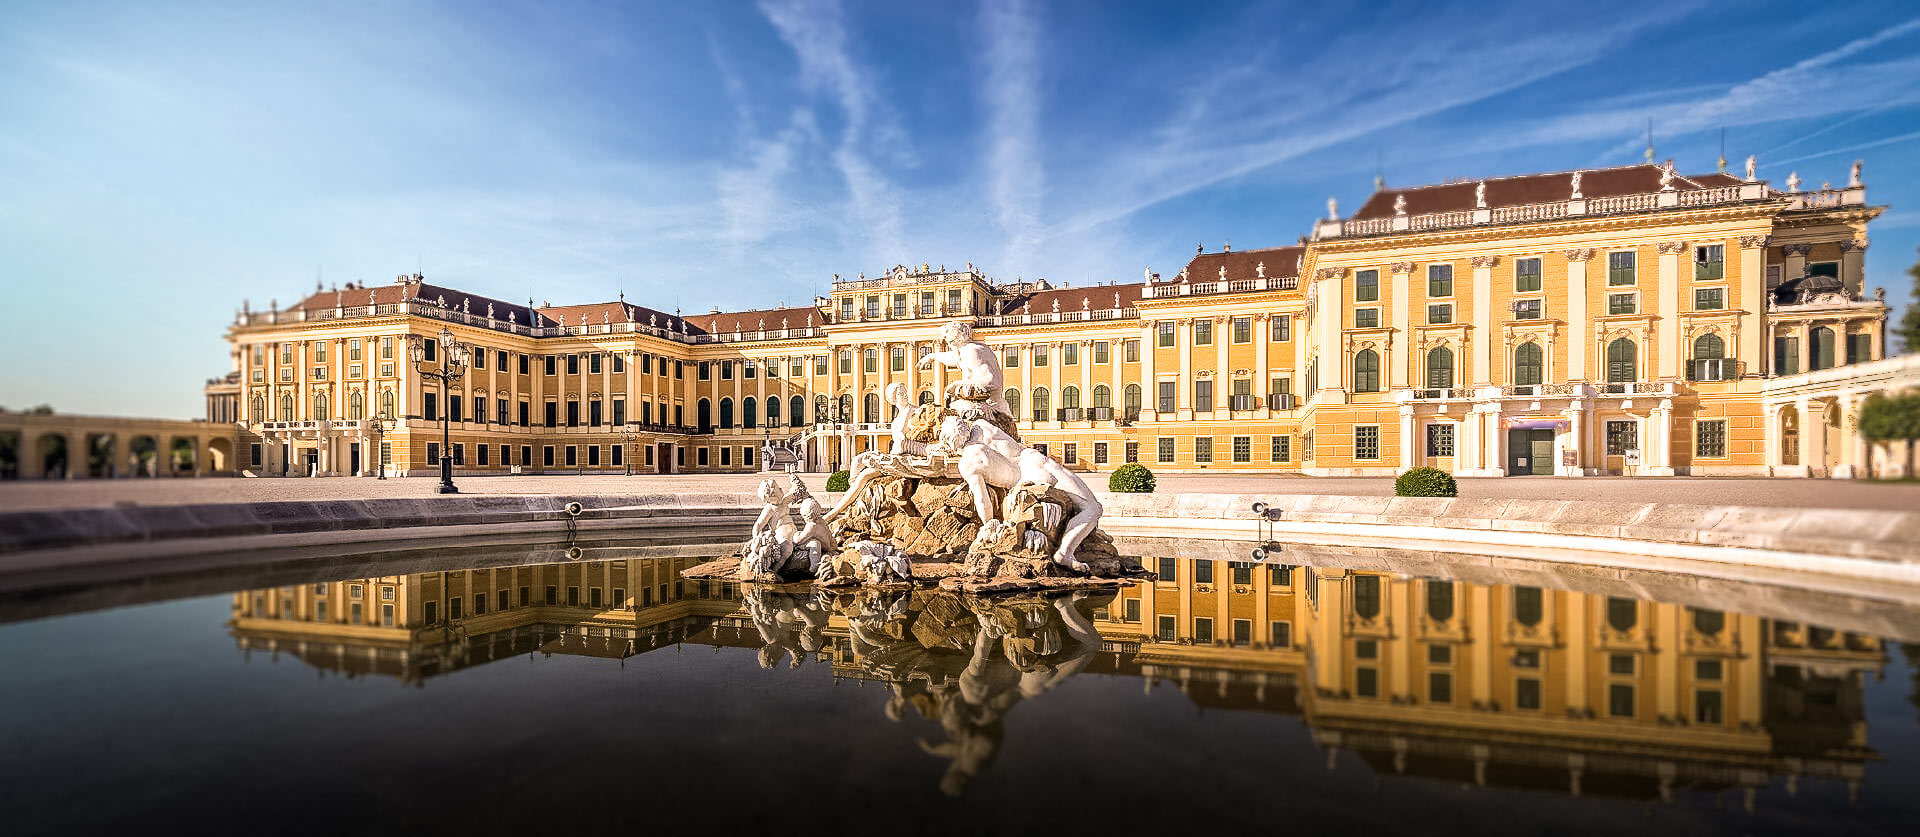 Schonbrunn Castle, Vienna - a week in Austria itinerary